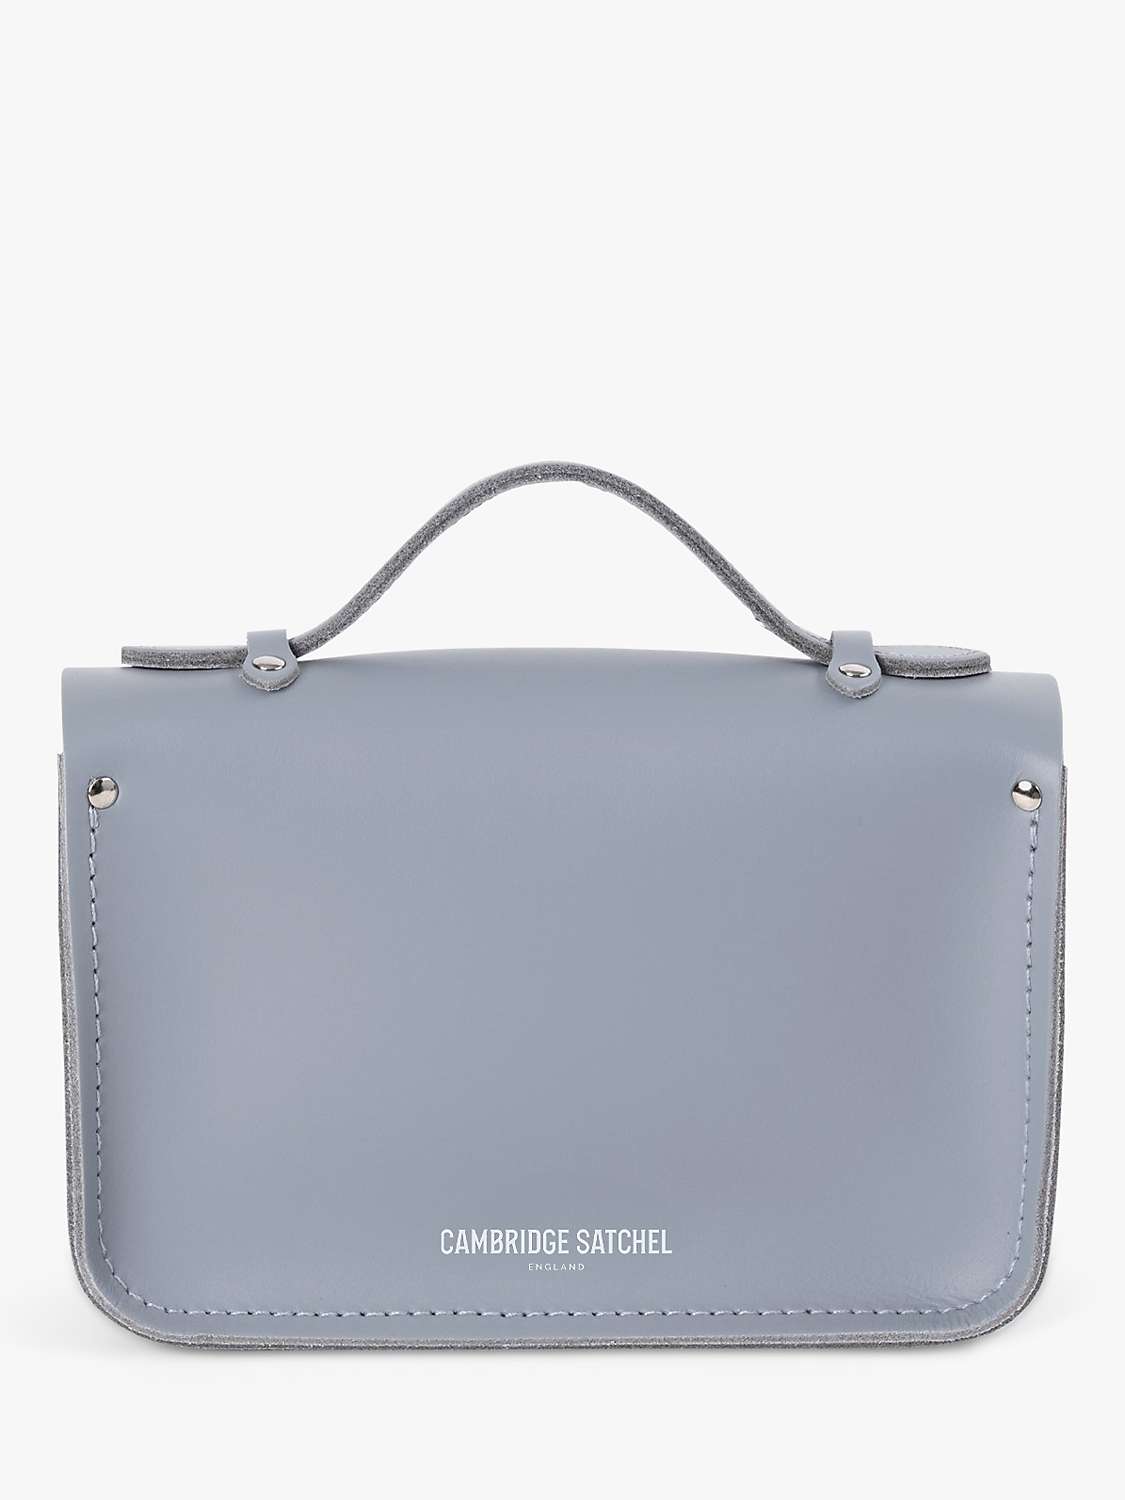 Buy Cambridge Satchel The Mini Leather Satchel Online at johnlewis.com